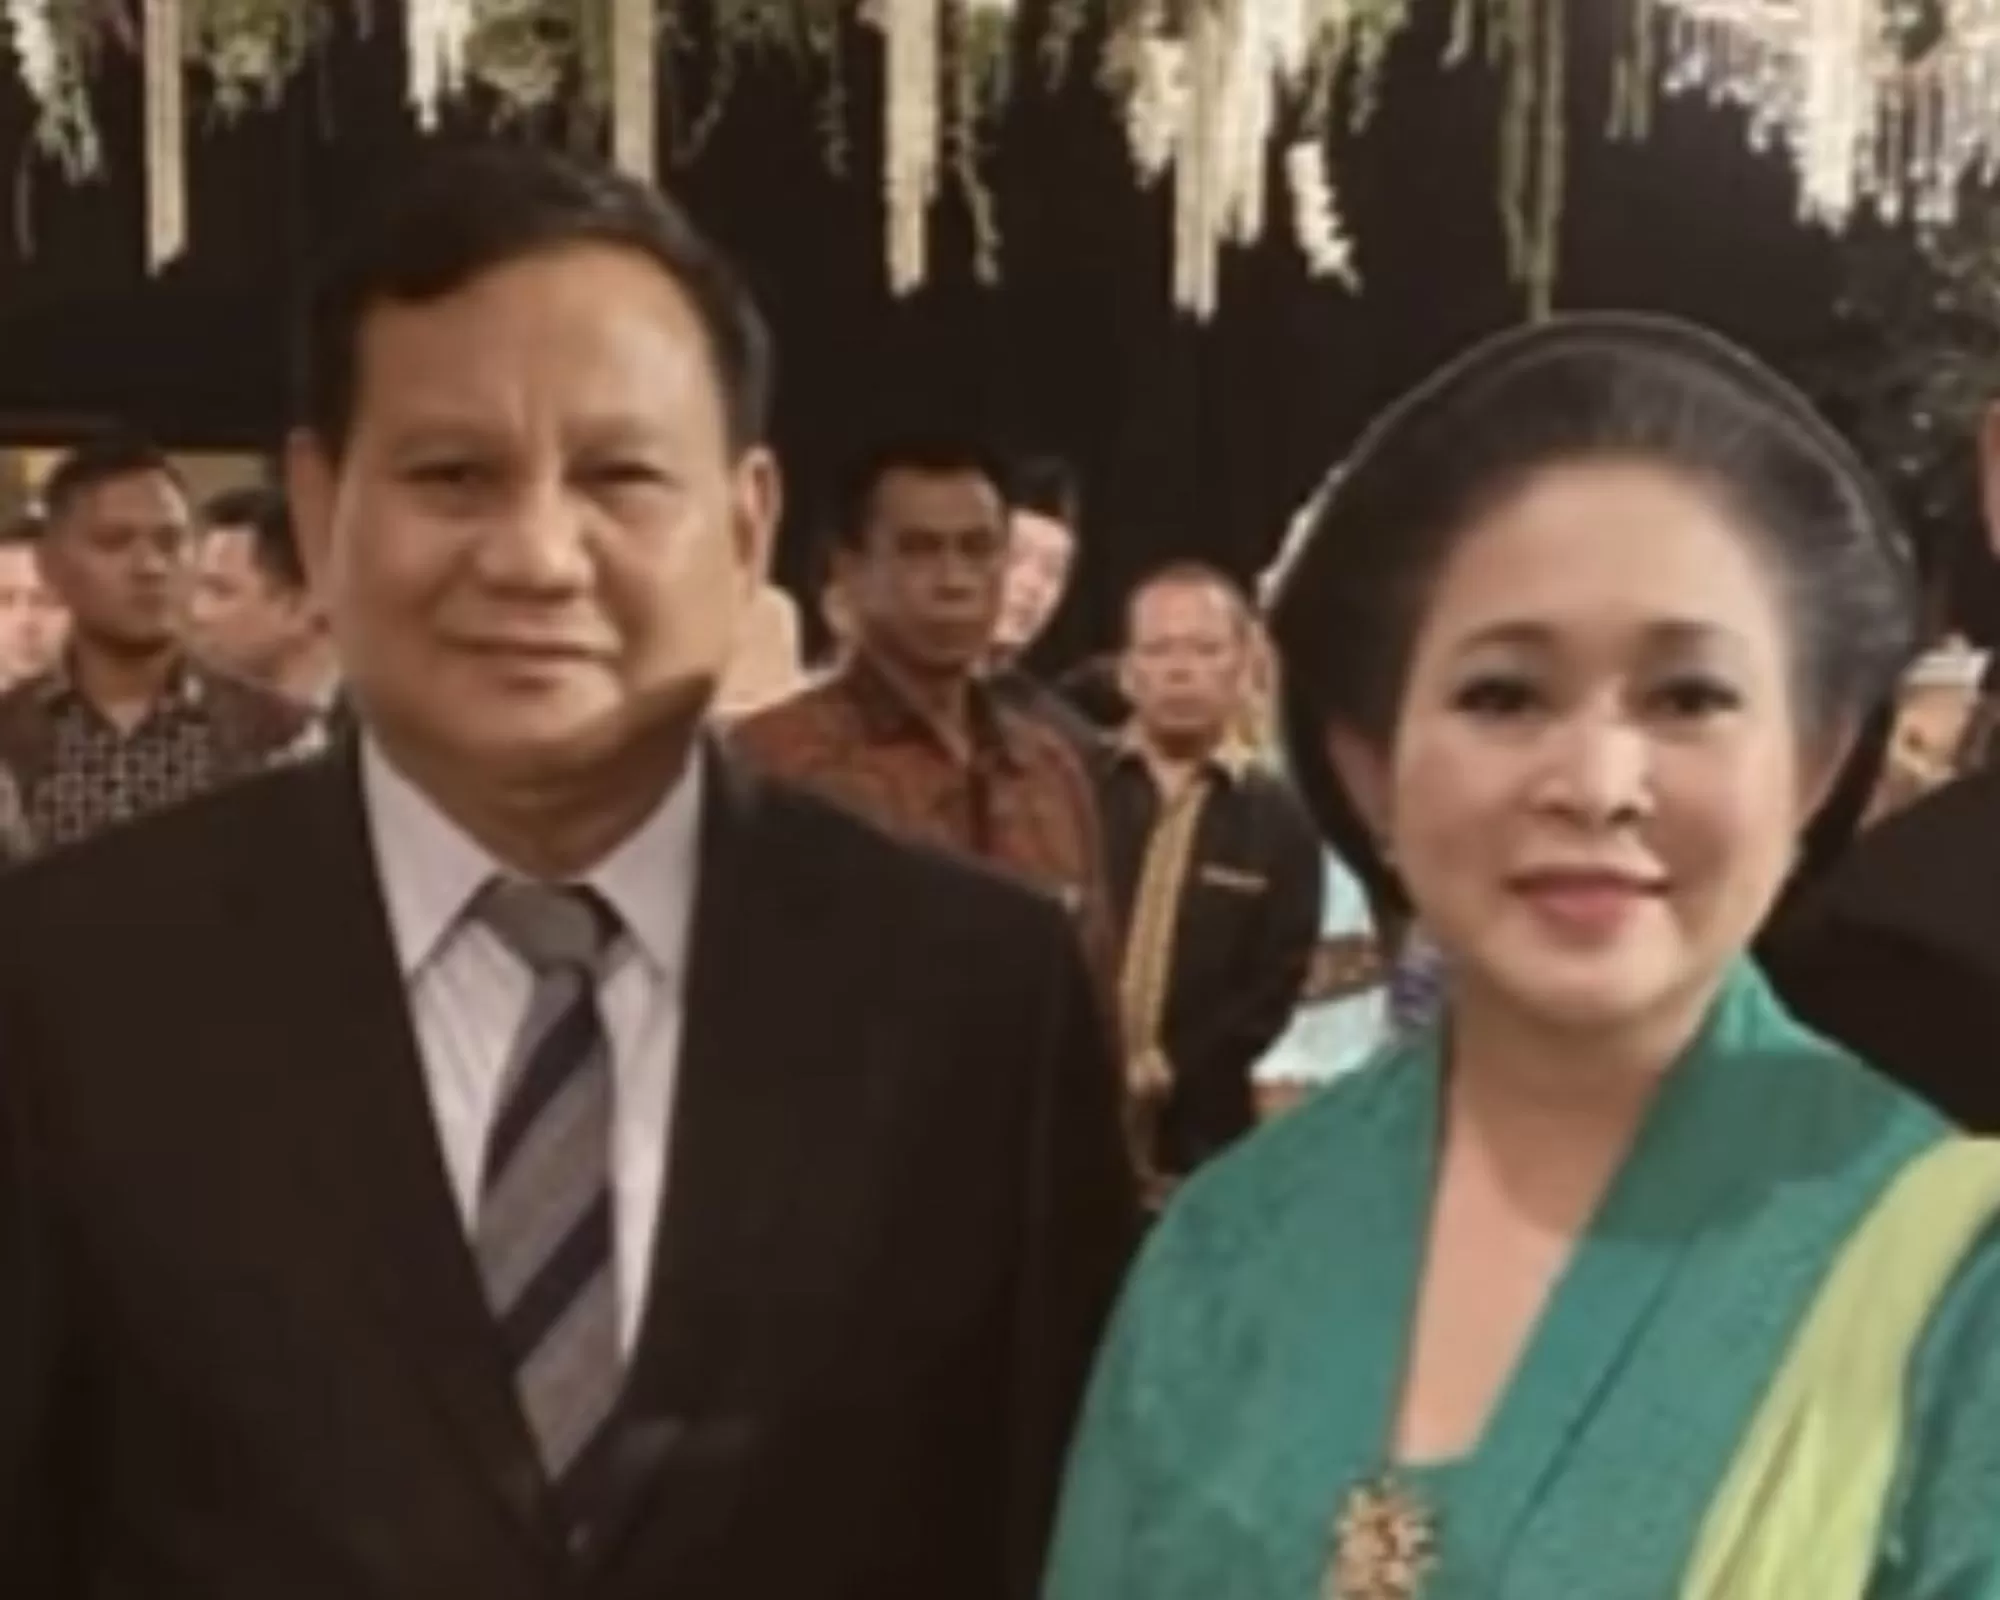 Bikin baper! Mengulik kisah cinta Prabowo Subianto dan Titiek Soeharto yang penuh drama, sempat dituding hanya ingin mempermainkan anak presiden